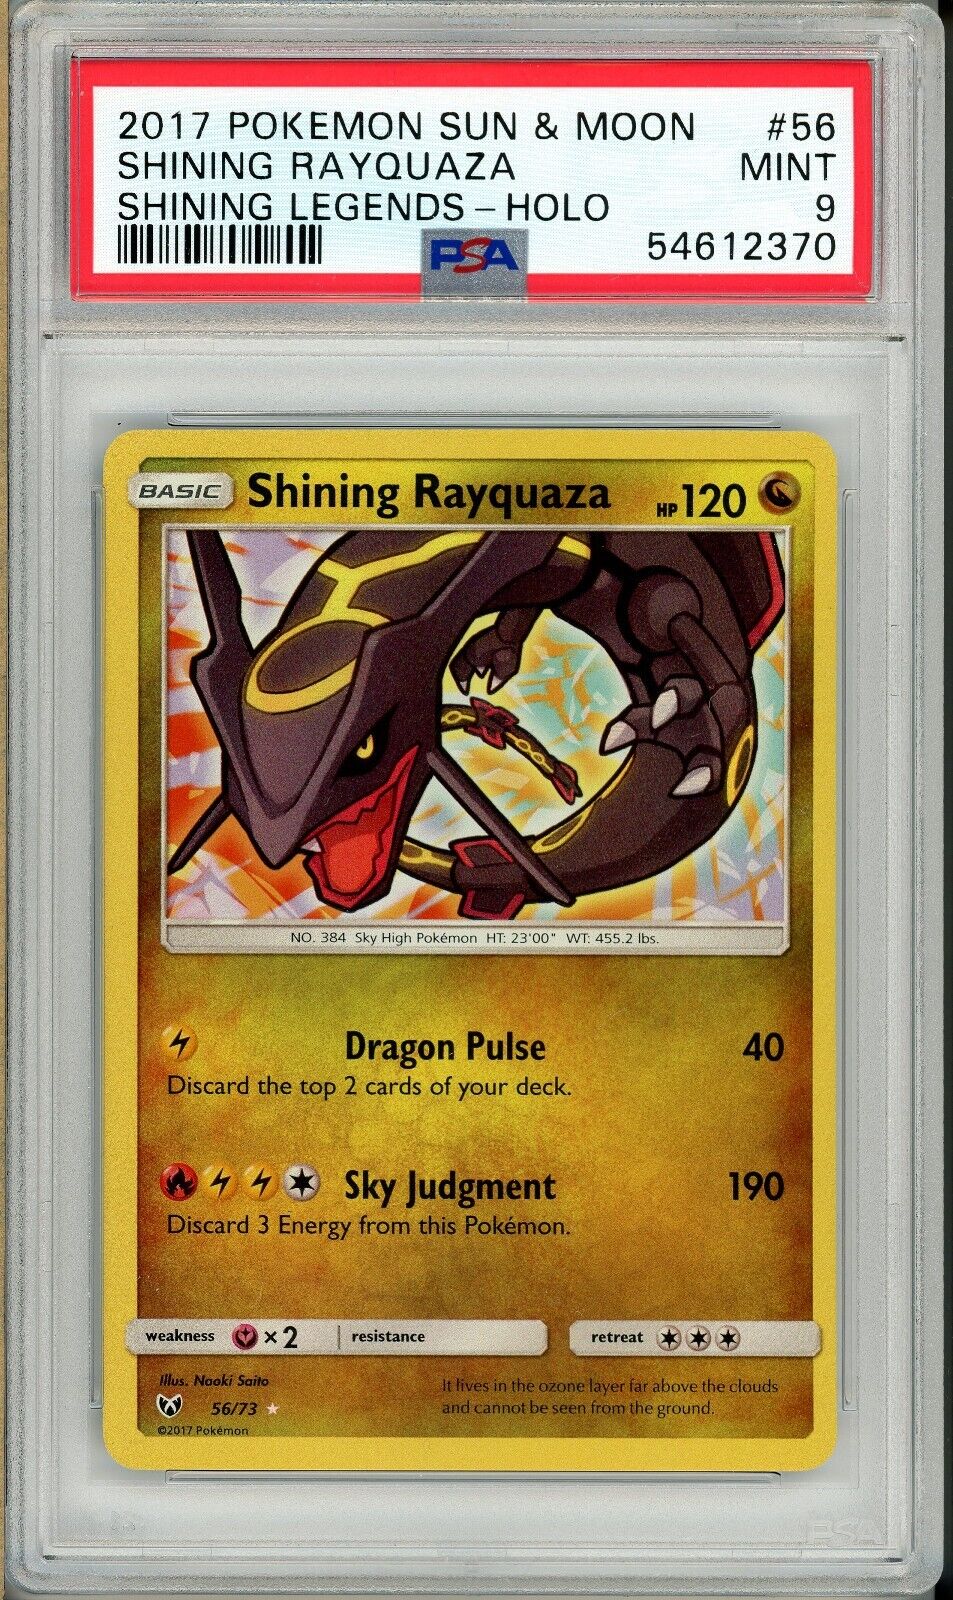 Pokemon Shining Legends SHINING RAYQUAZA 56/73 Holo Rare Card PSA 9 Mint